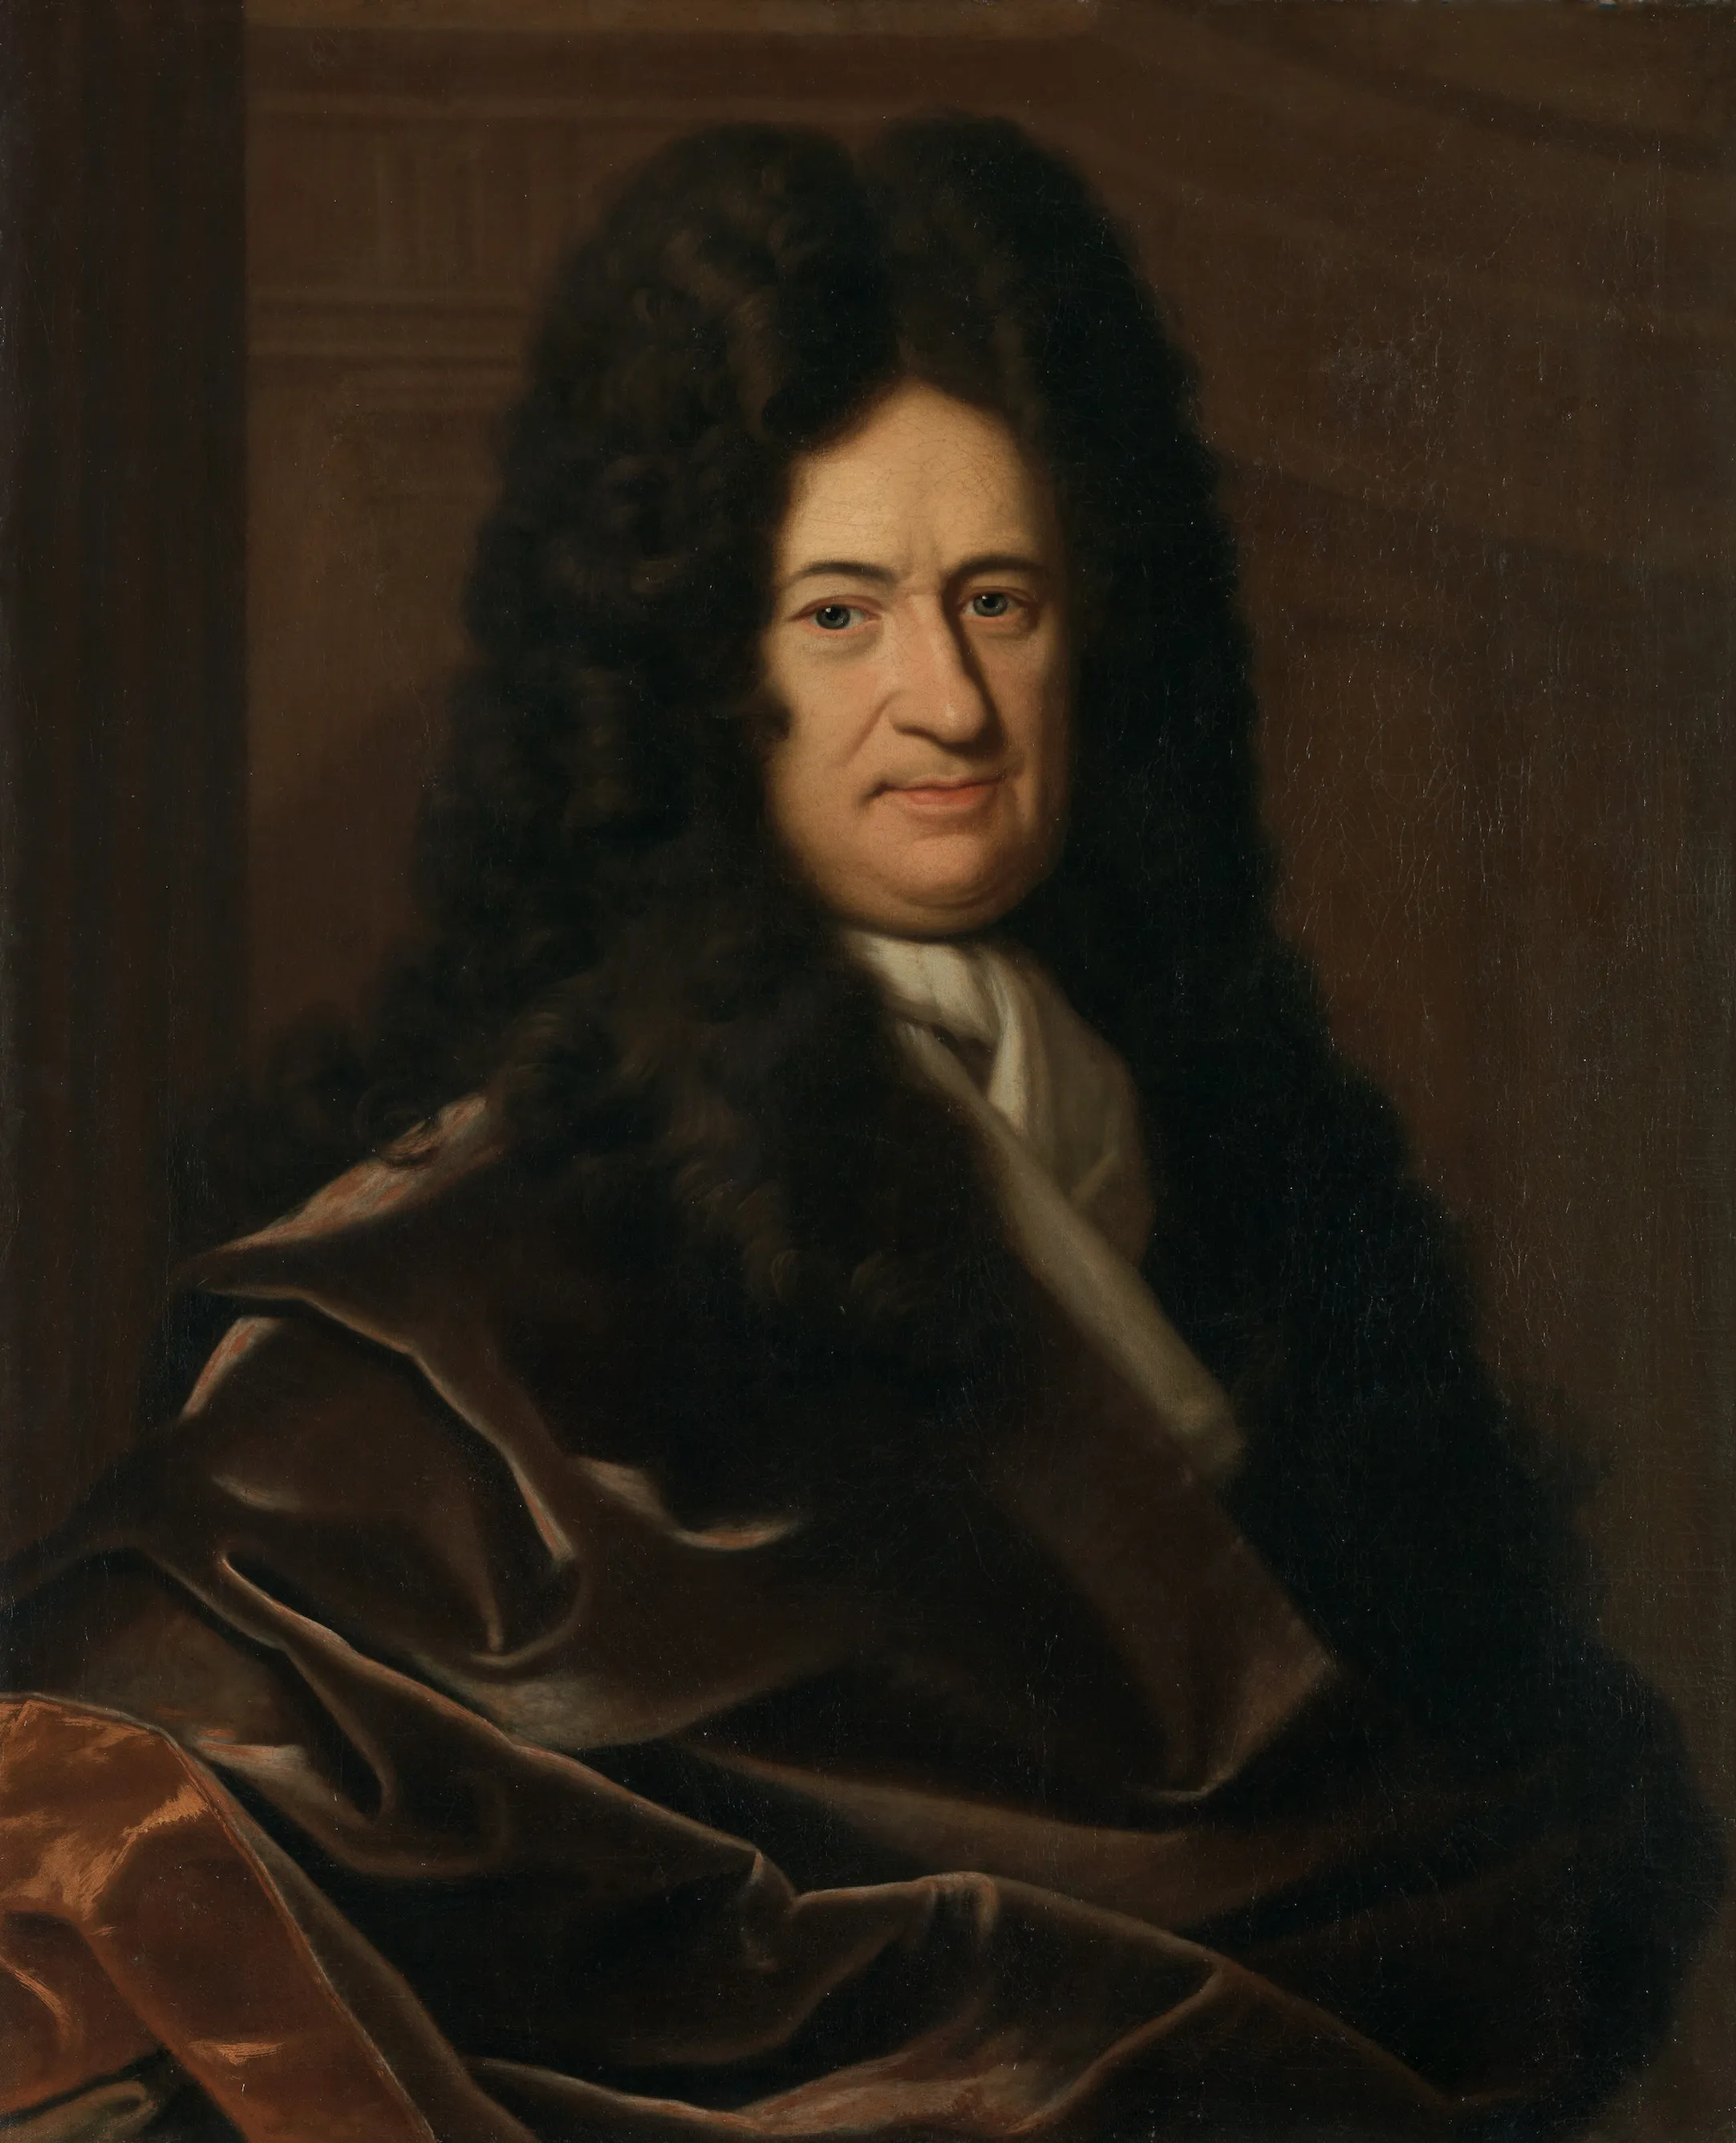 Painting of Gottfried Leibniz